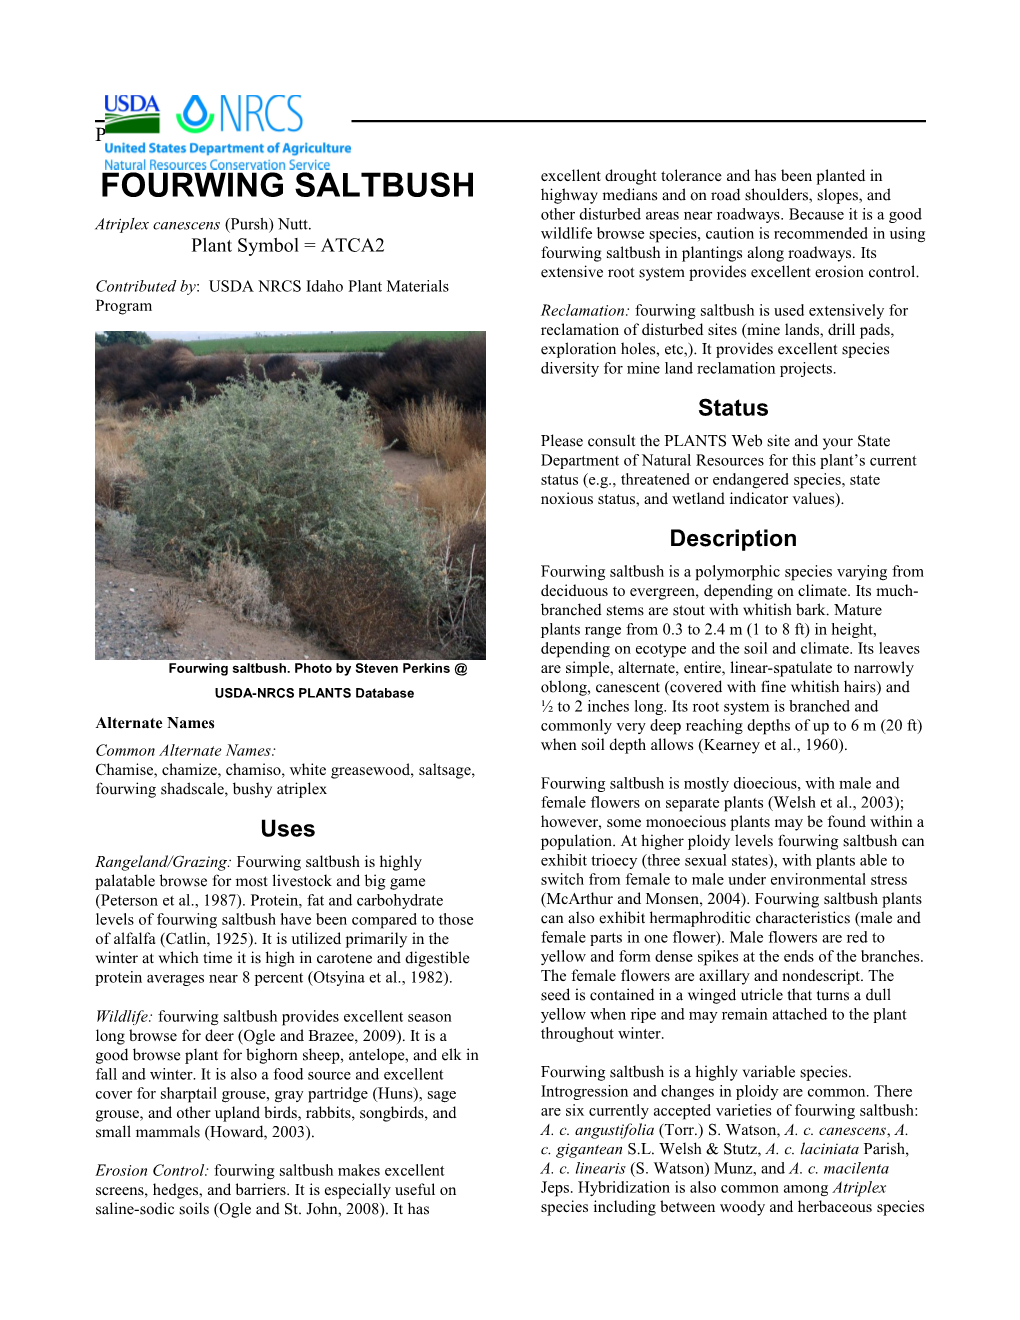 Plant Guide for Fourwing Saltbush (Atriplex Canescens)